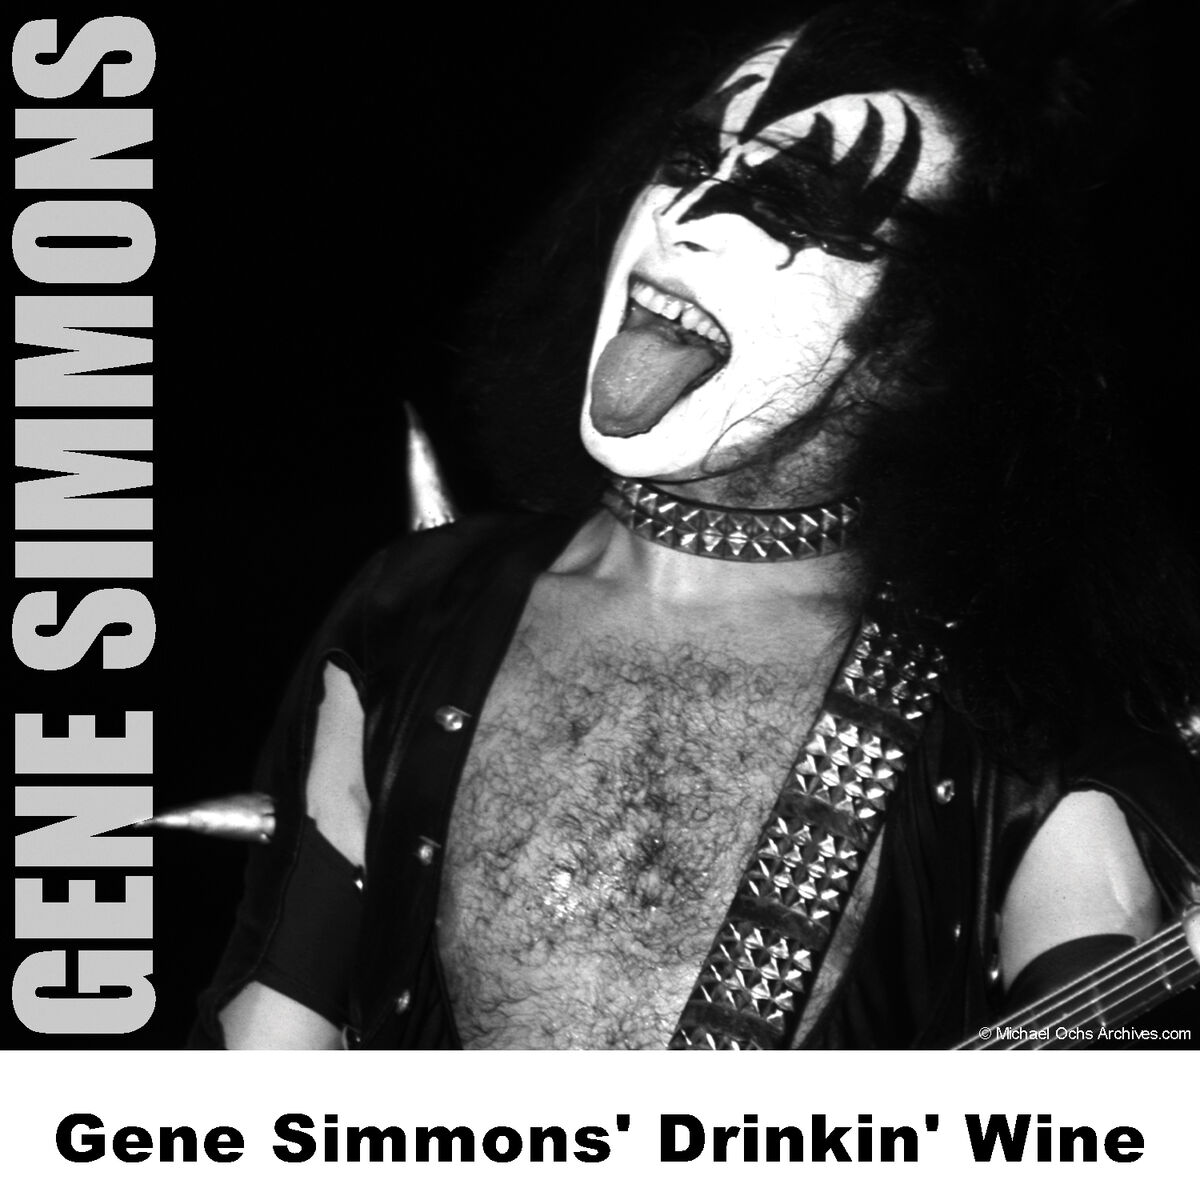 Gene Simmons: albums